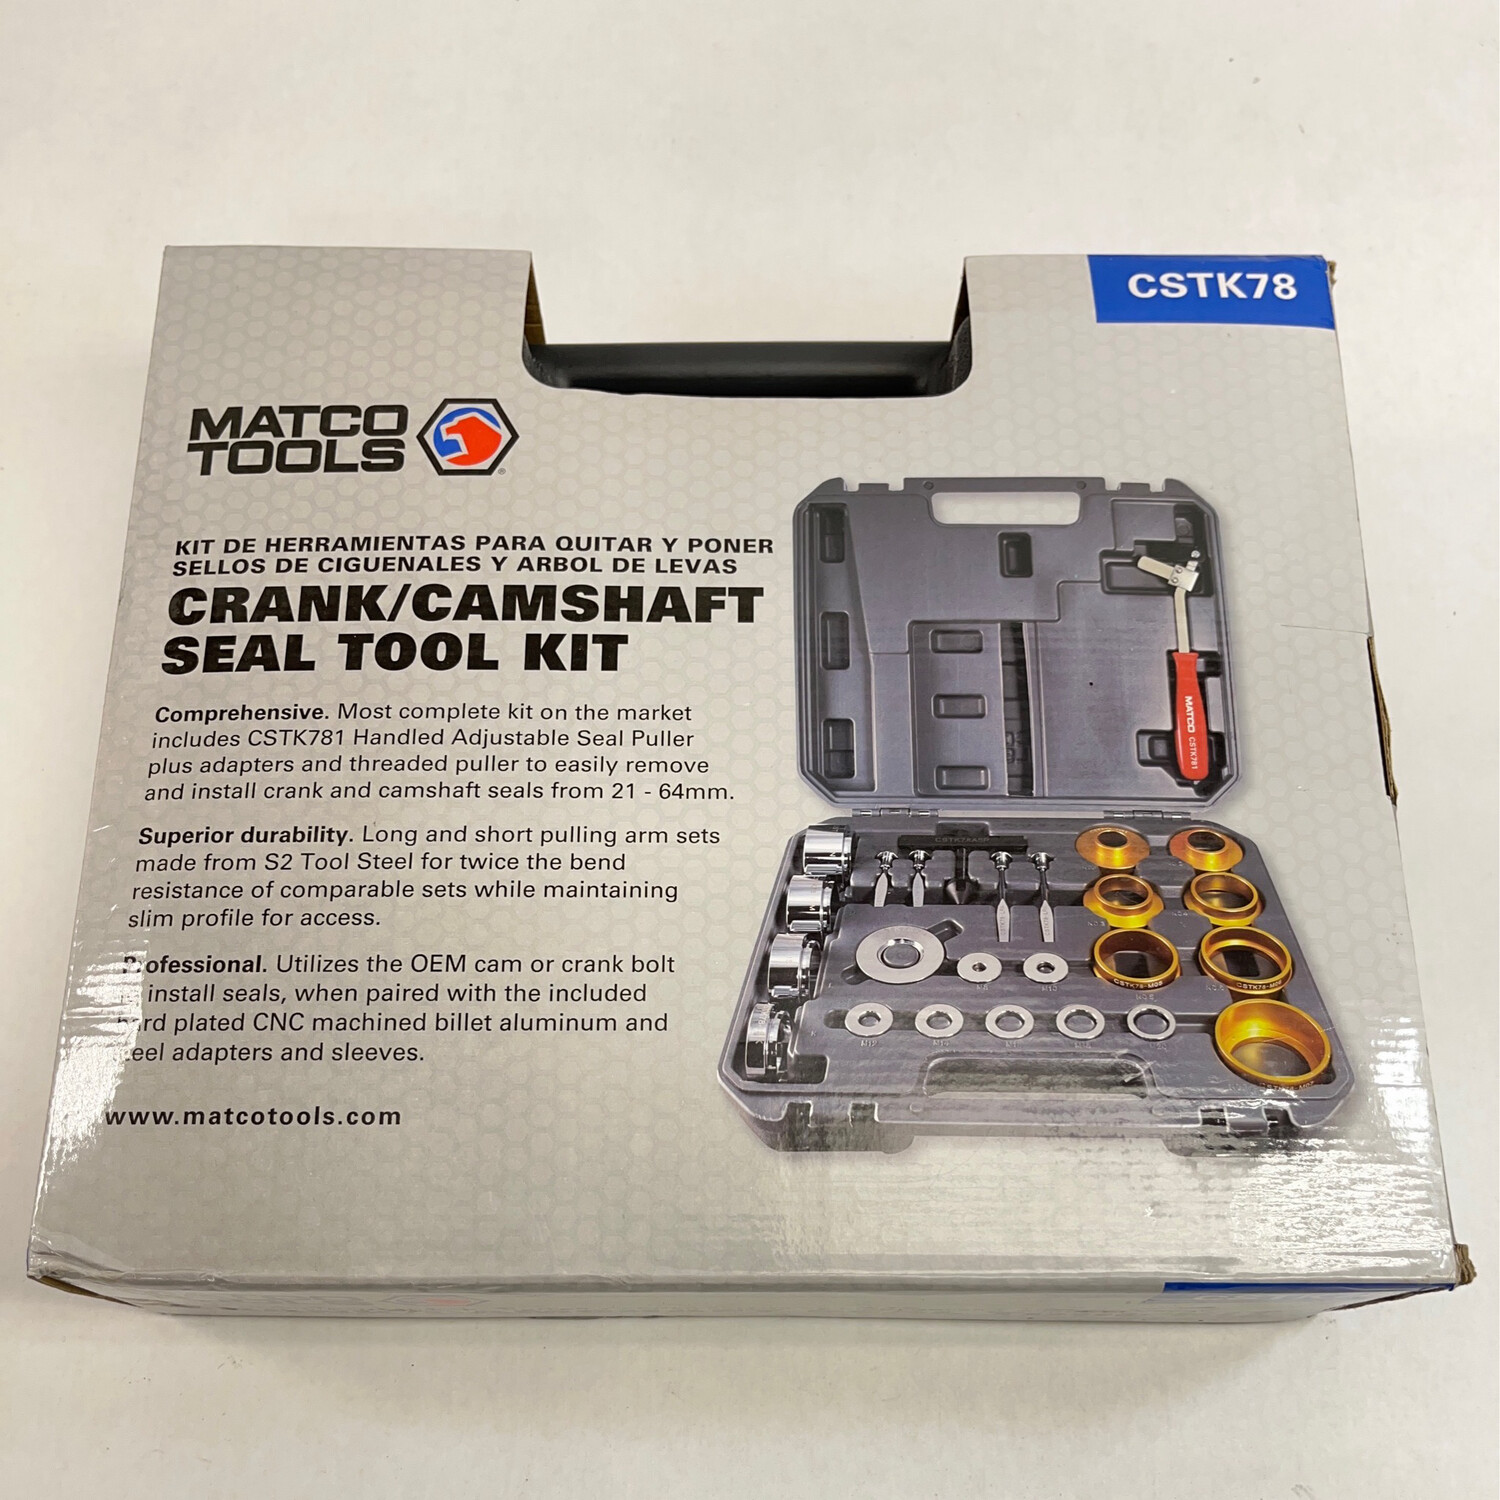 Matco Tools Crank/camshaft Seal Tool Kit, CSTK78